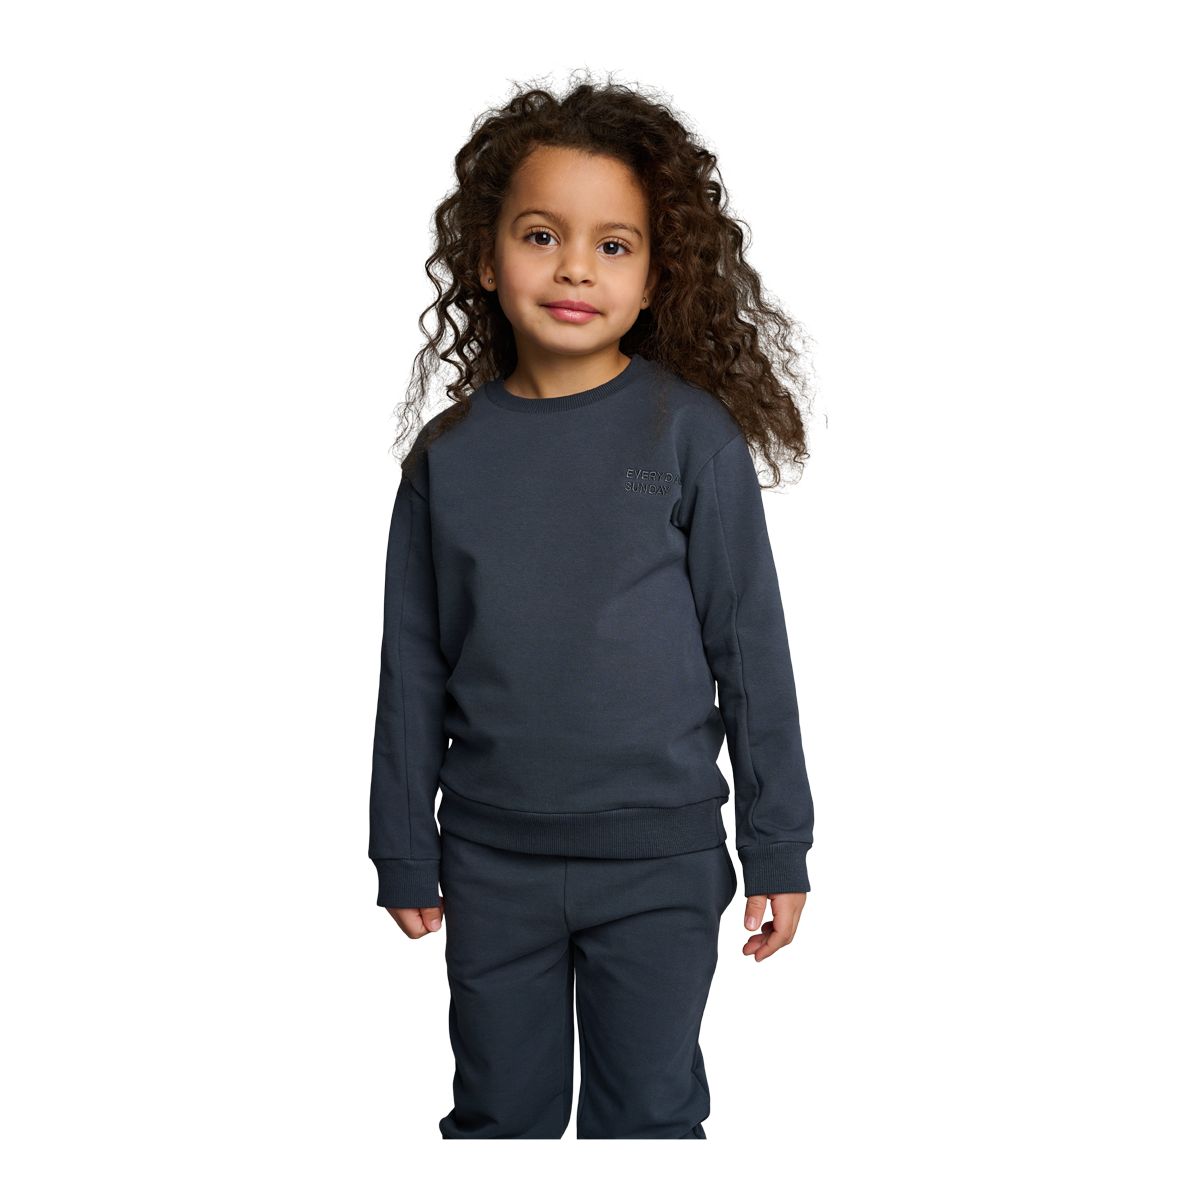 Everyday Sunday Toddler Girls' 2-7 Weekender Sweatshirt